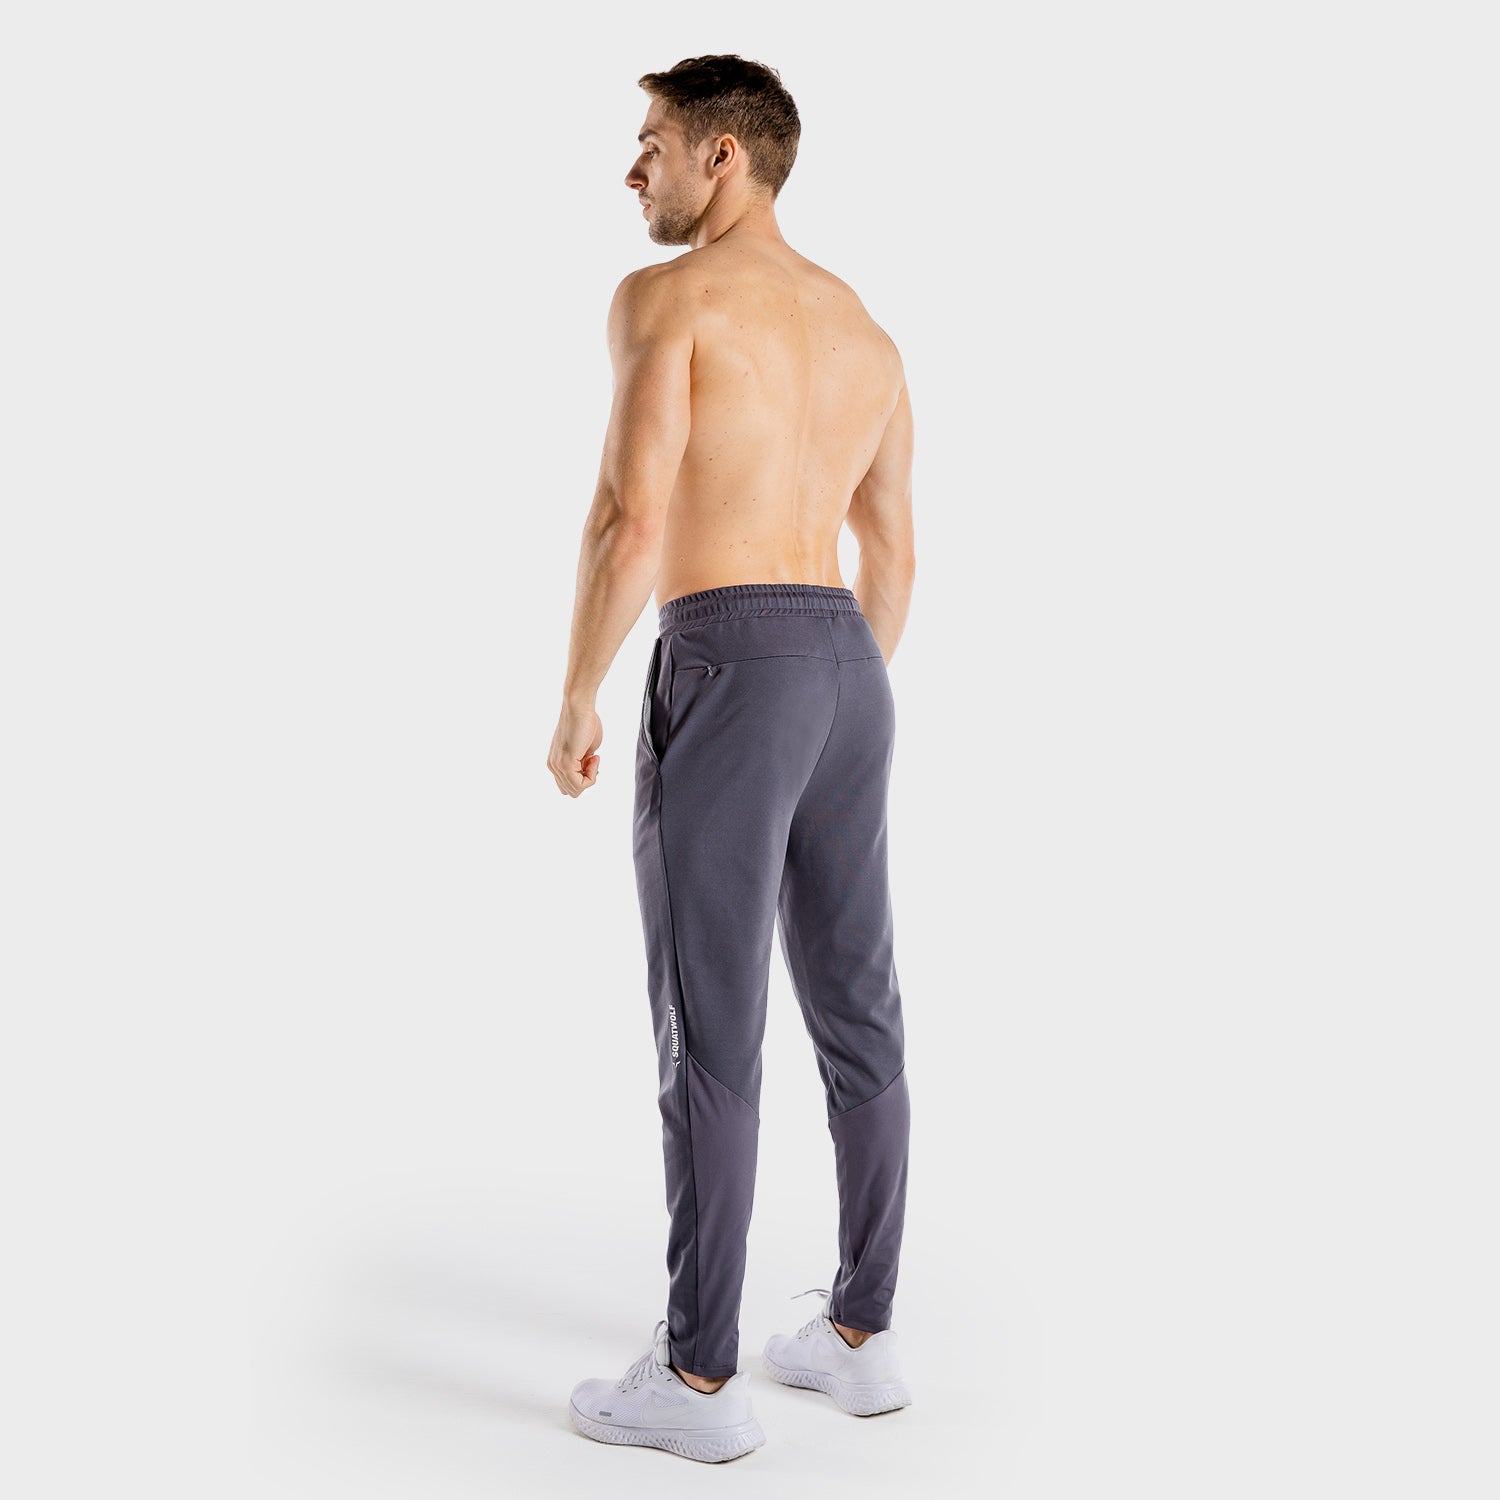 squatwolf-workout-pants-for-men-flux-joggers-slate-gym-wear